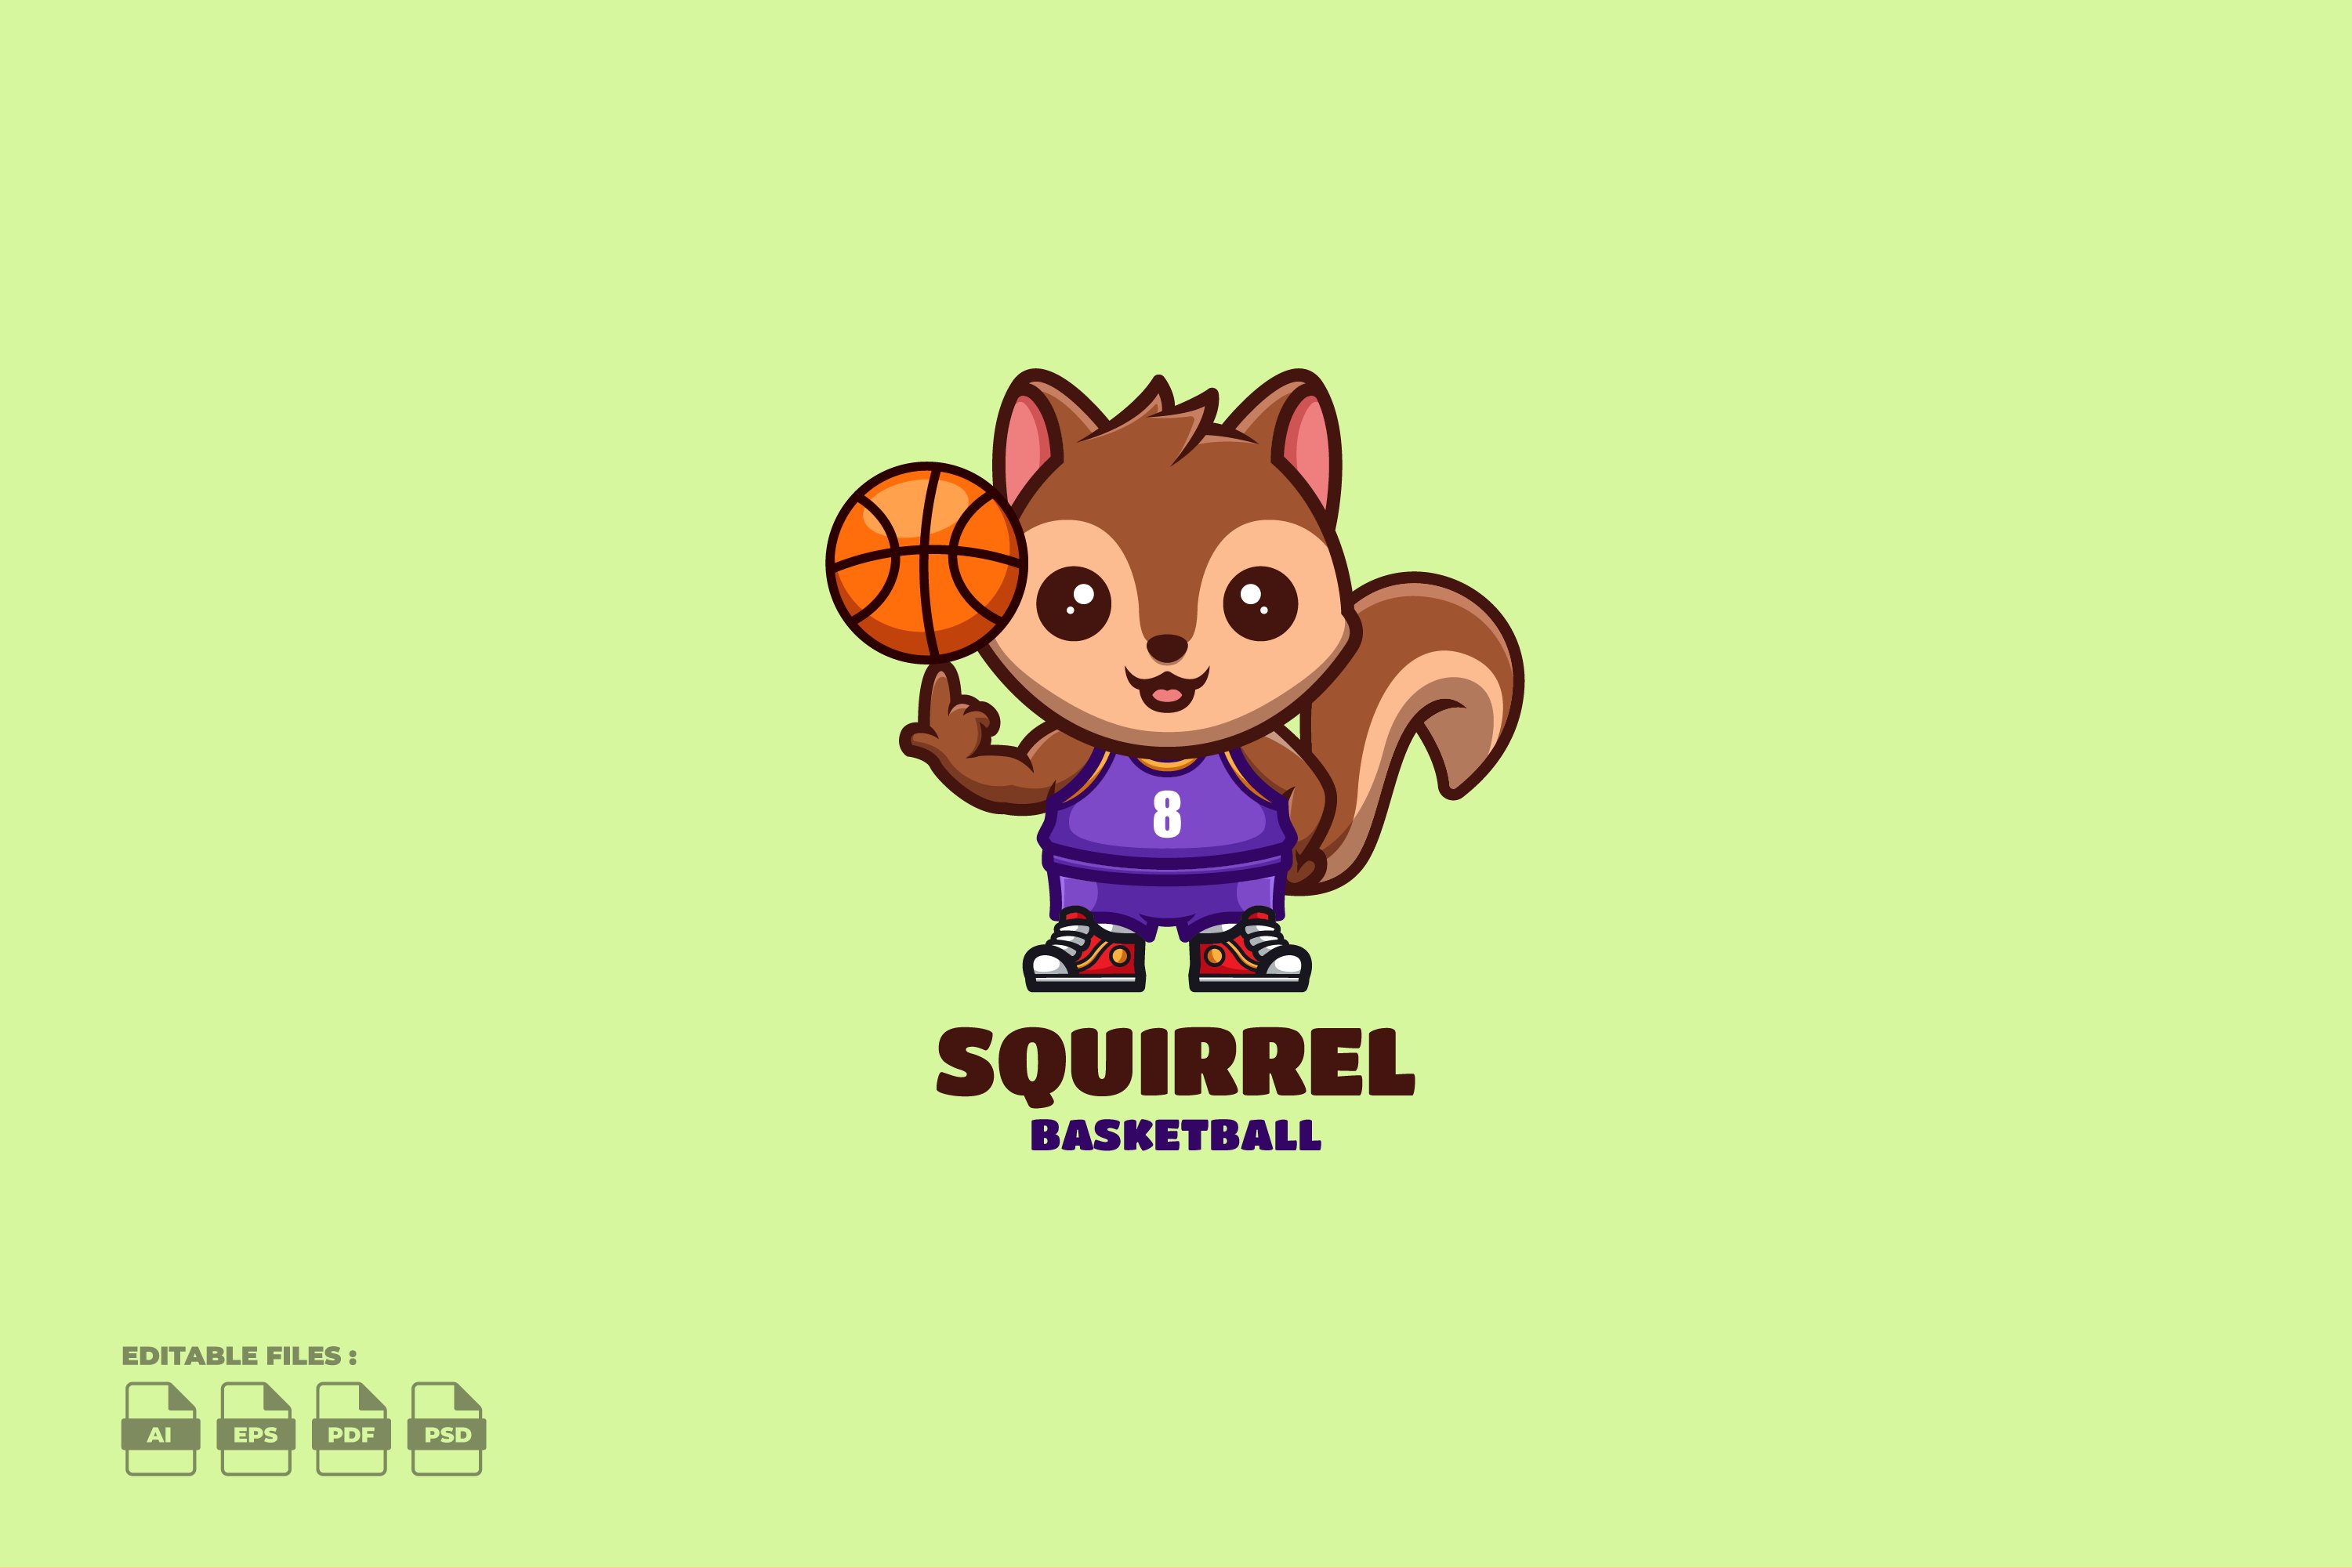 Basketball Squirrel Cute Mascot Logo cover image.